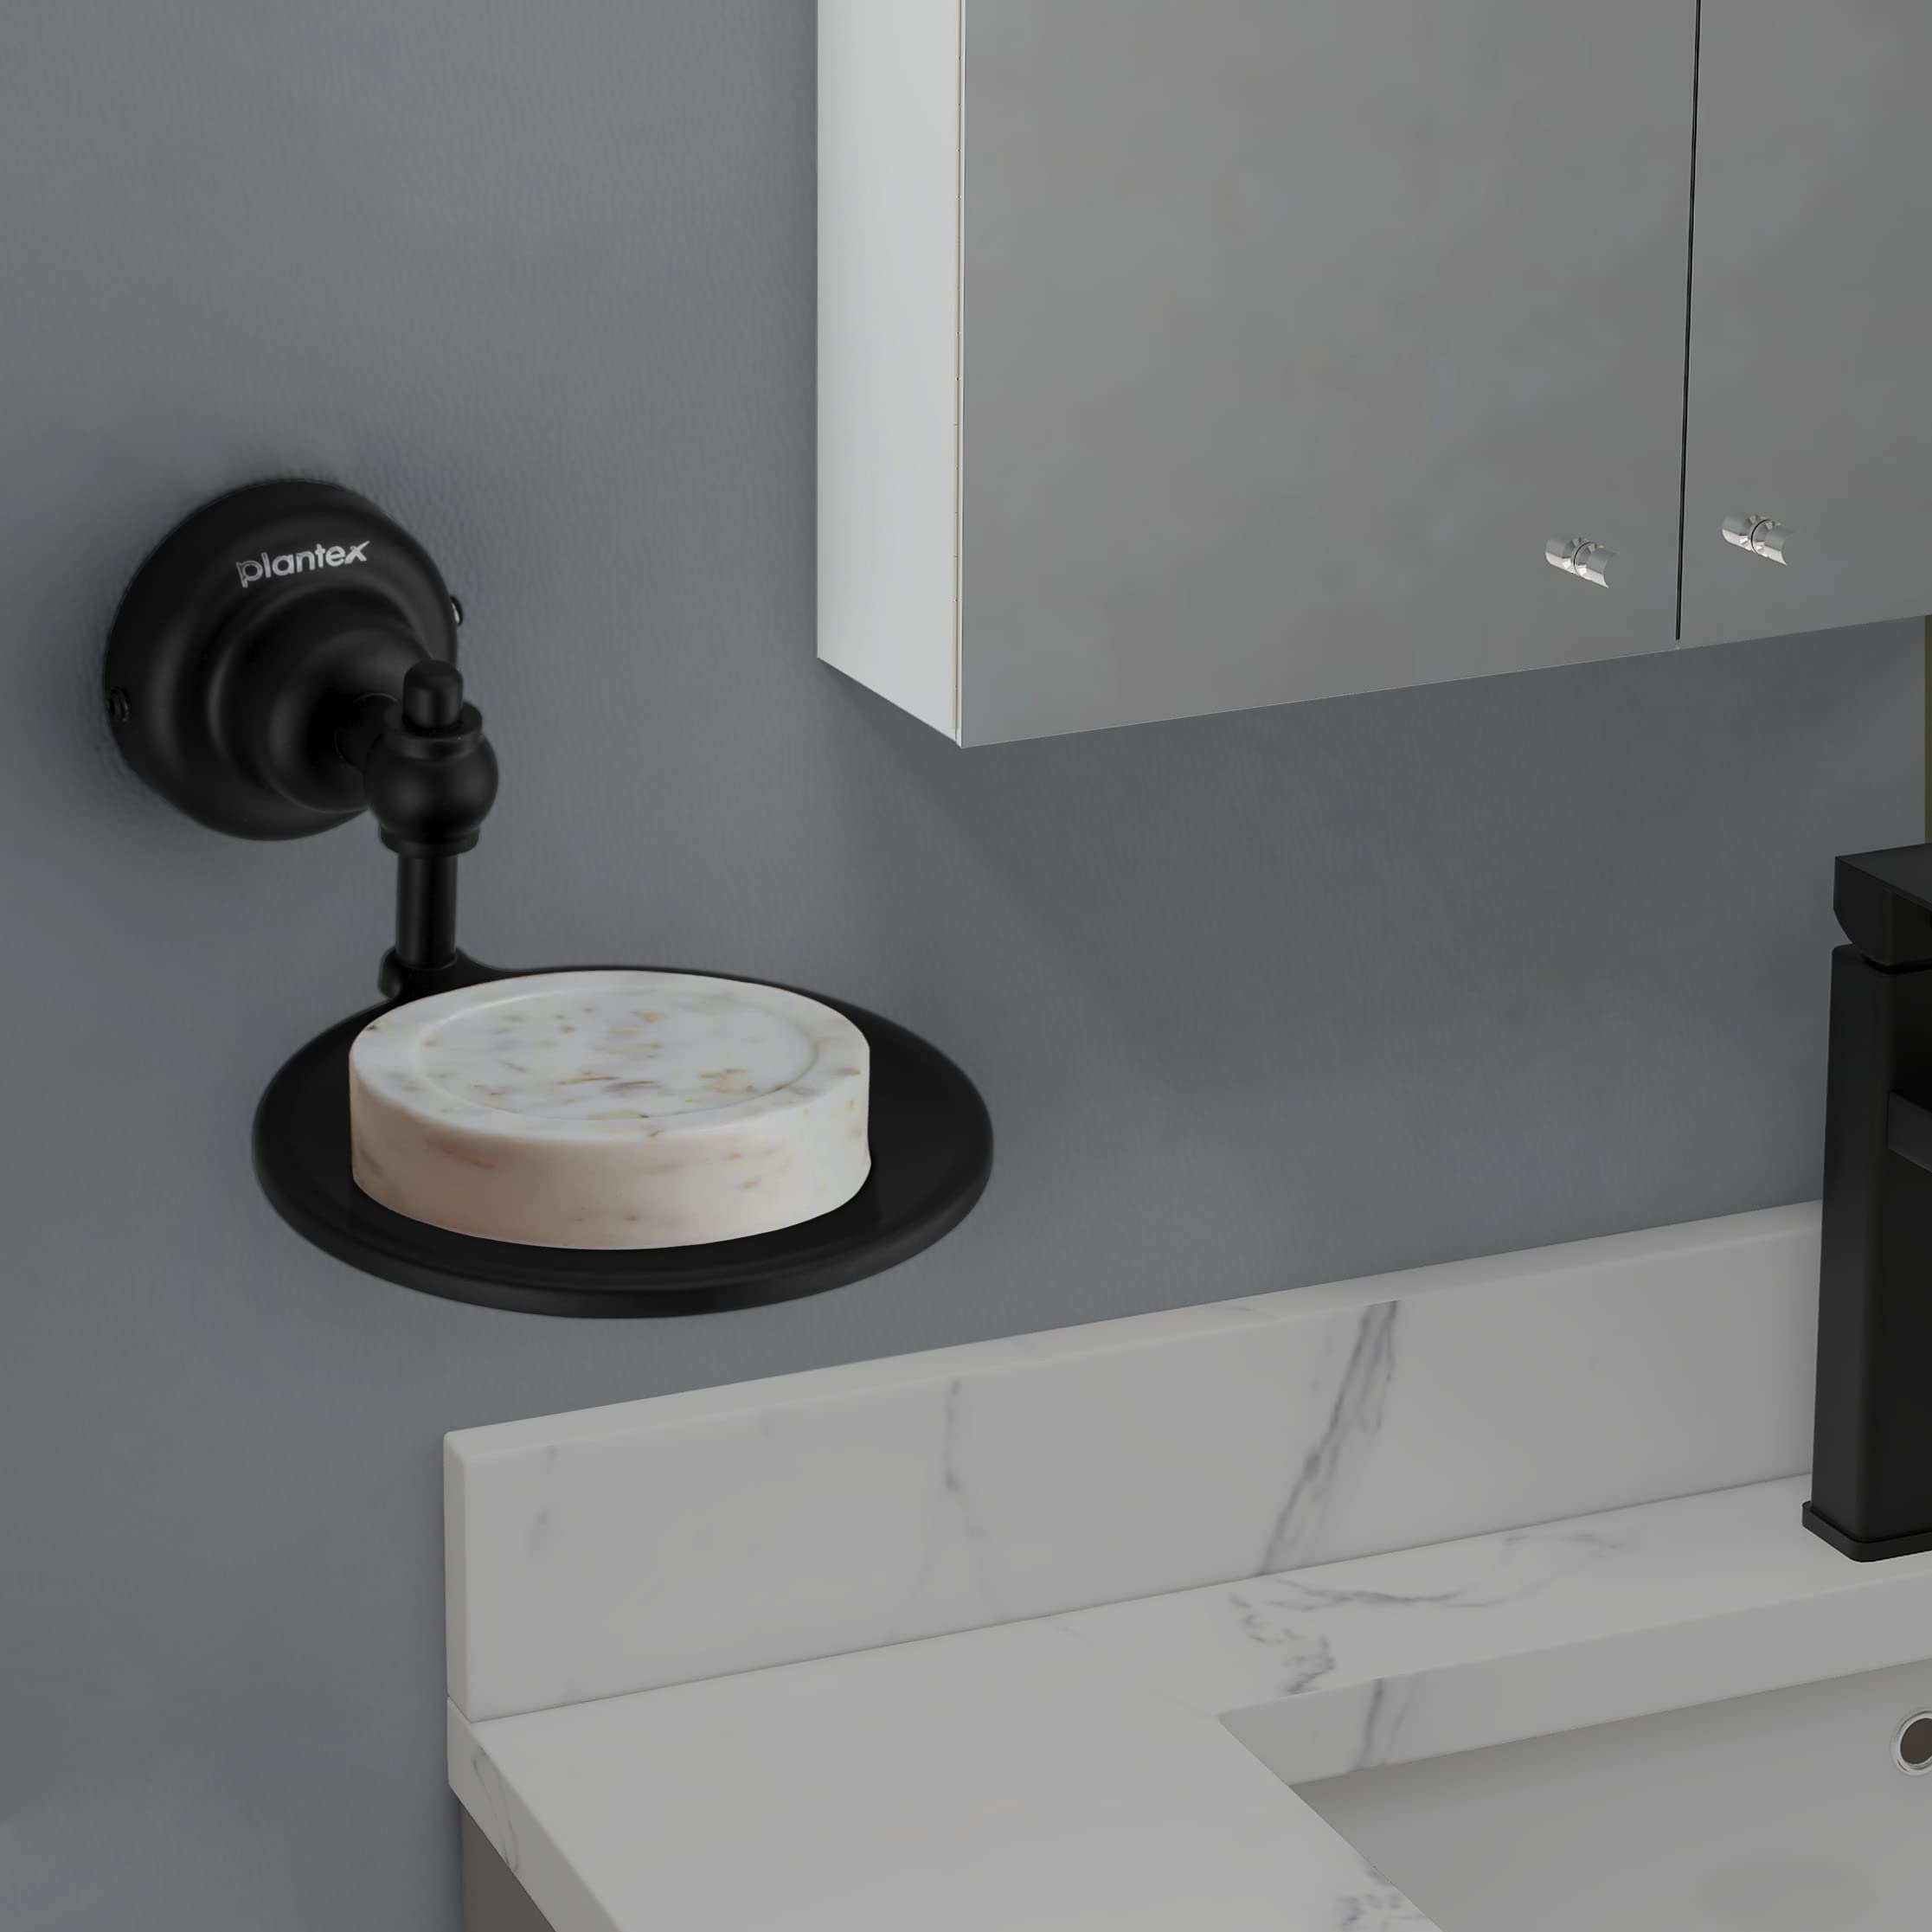 Plantex Skyllo Black Bathroom soap case/Holder/Stand (304 Stainless Steel)